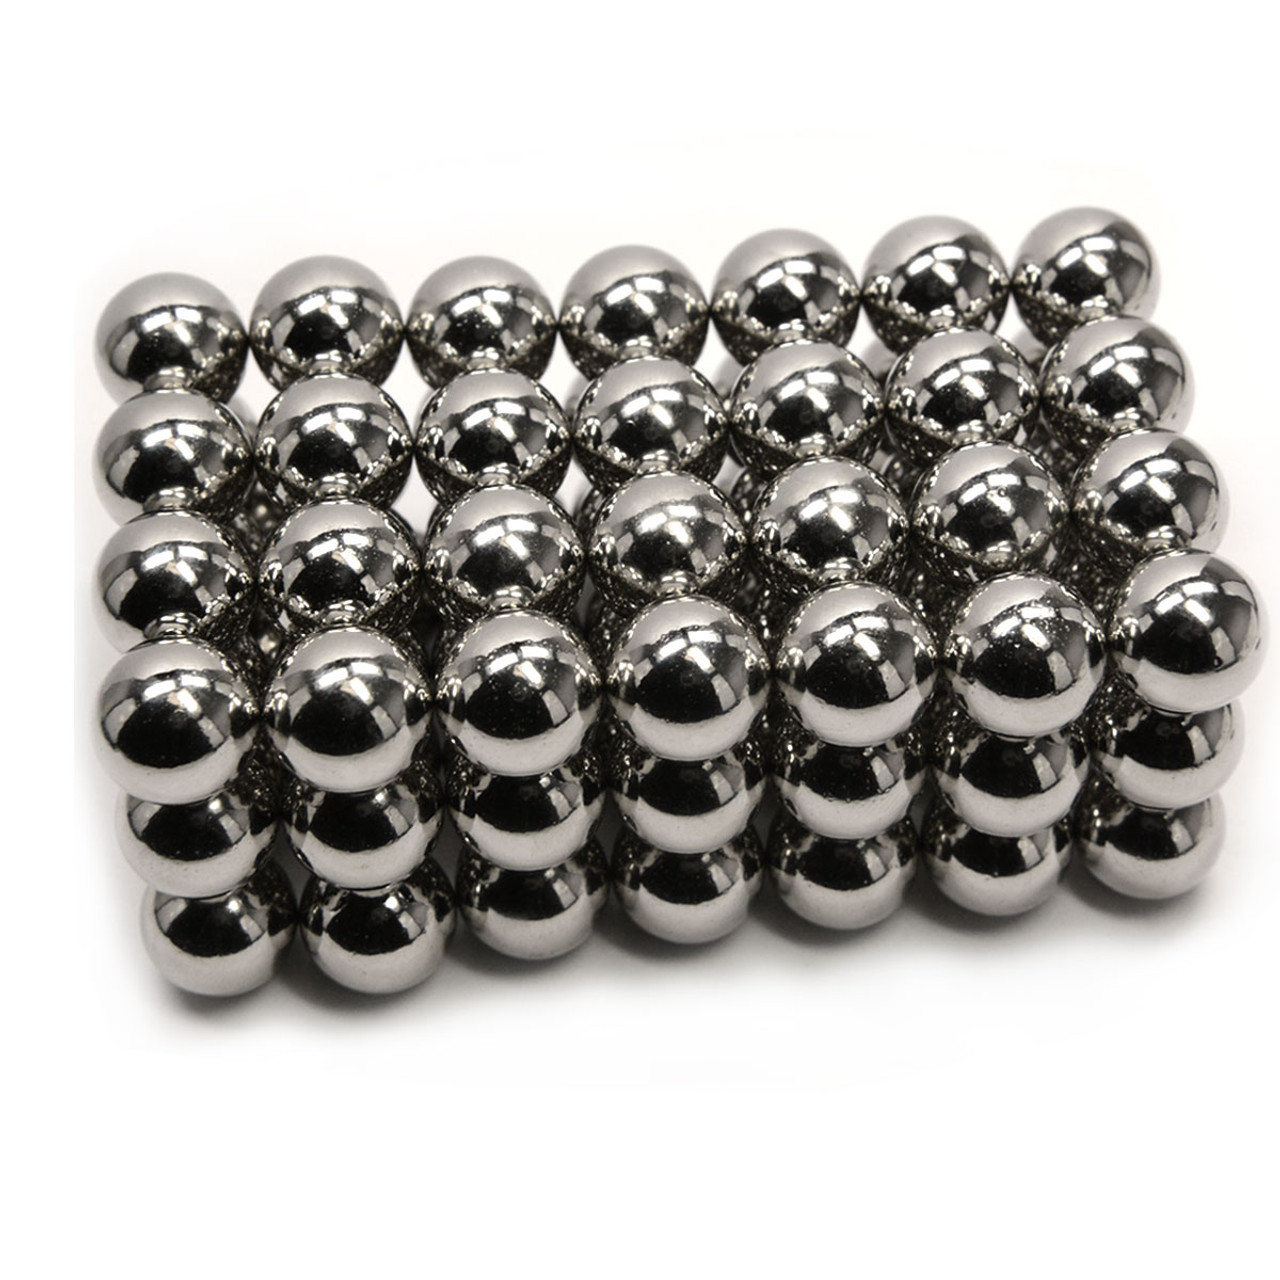 Bulk Neodymium Magnetic Balls neodymium rare earth sphere magnets